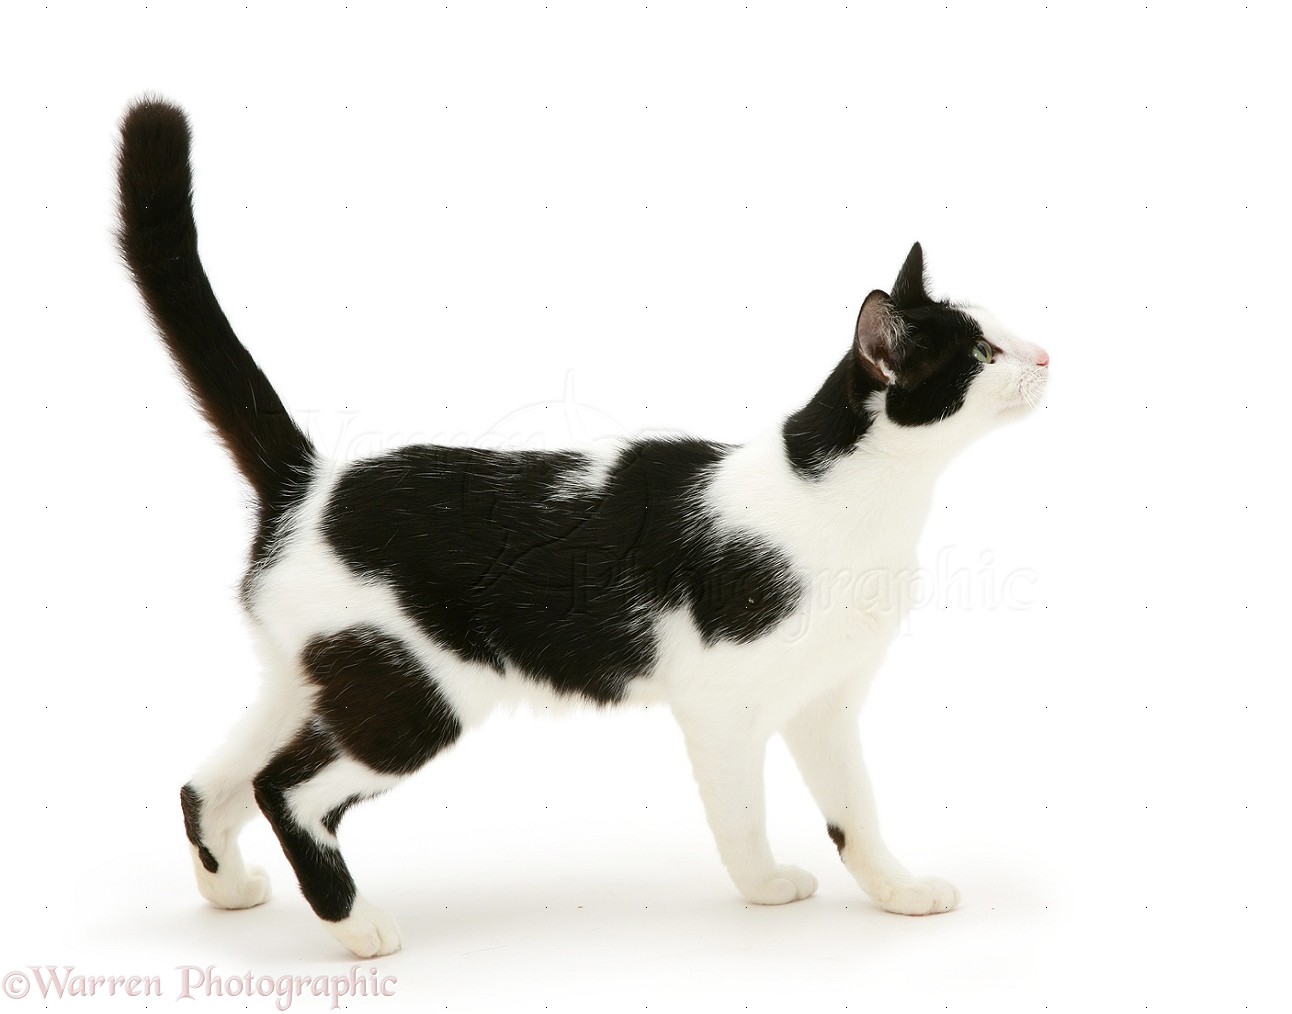 Black-and-white cat standing photo - WP28368